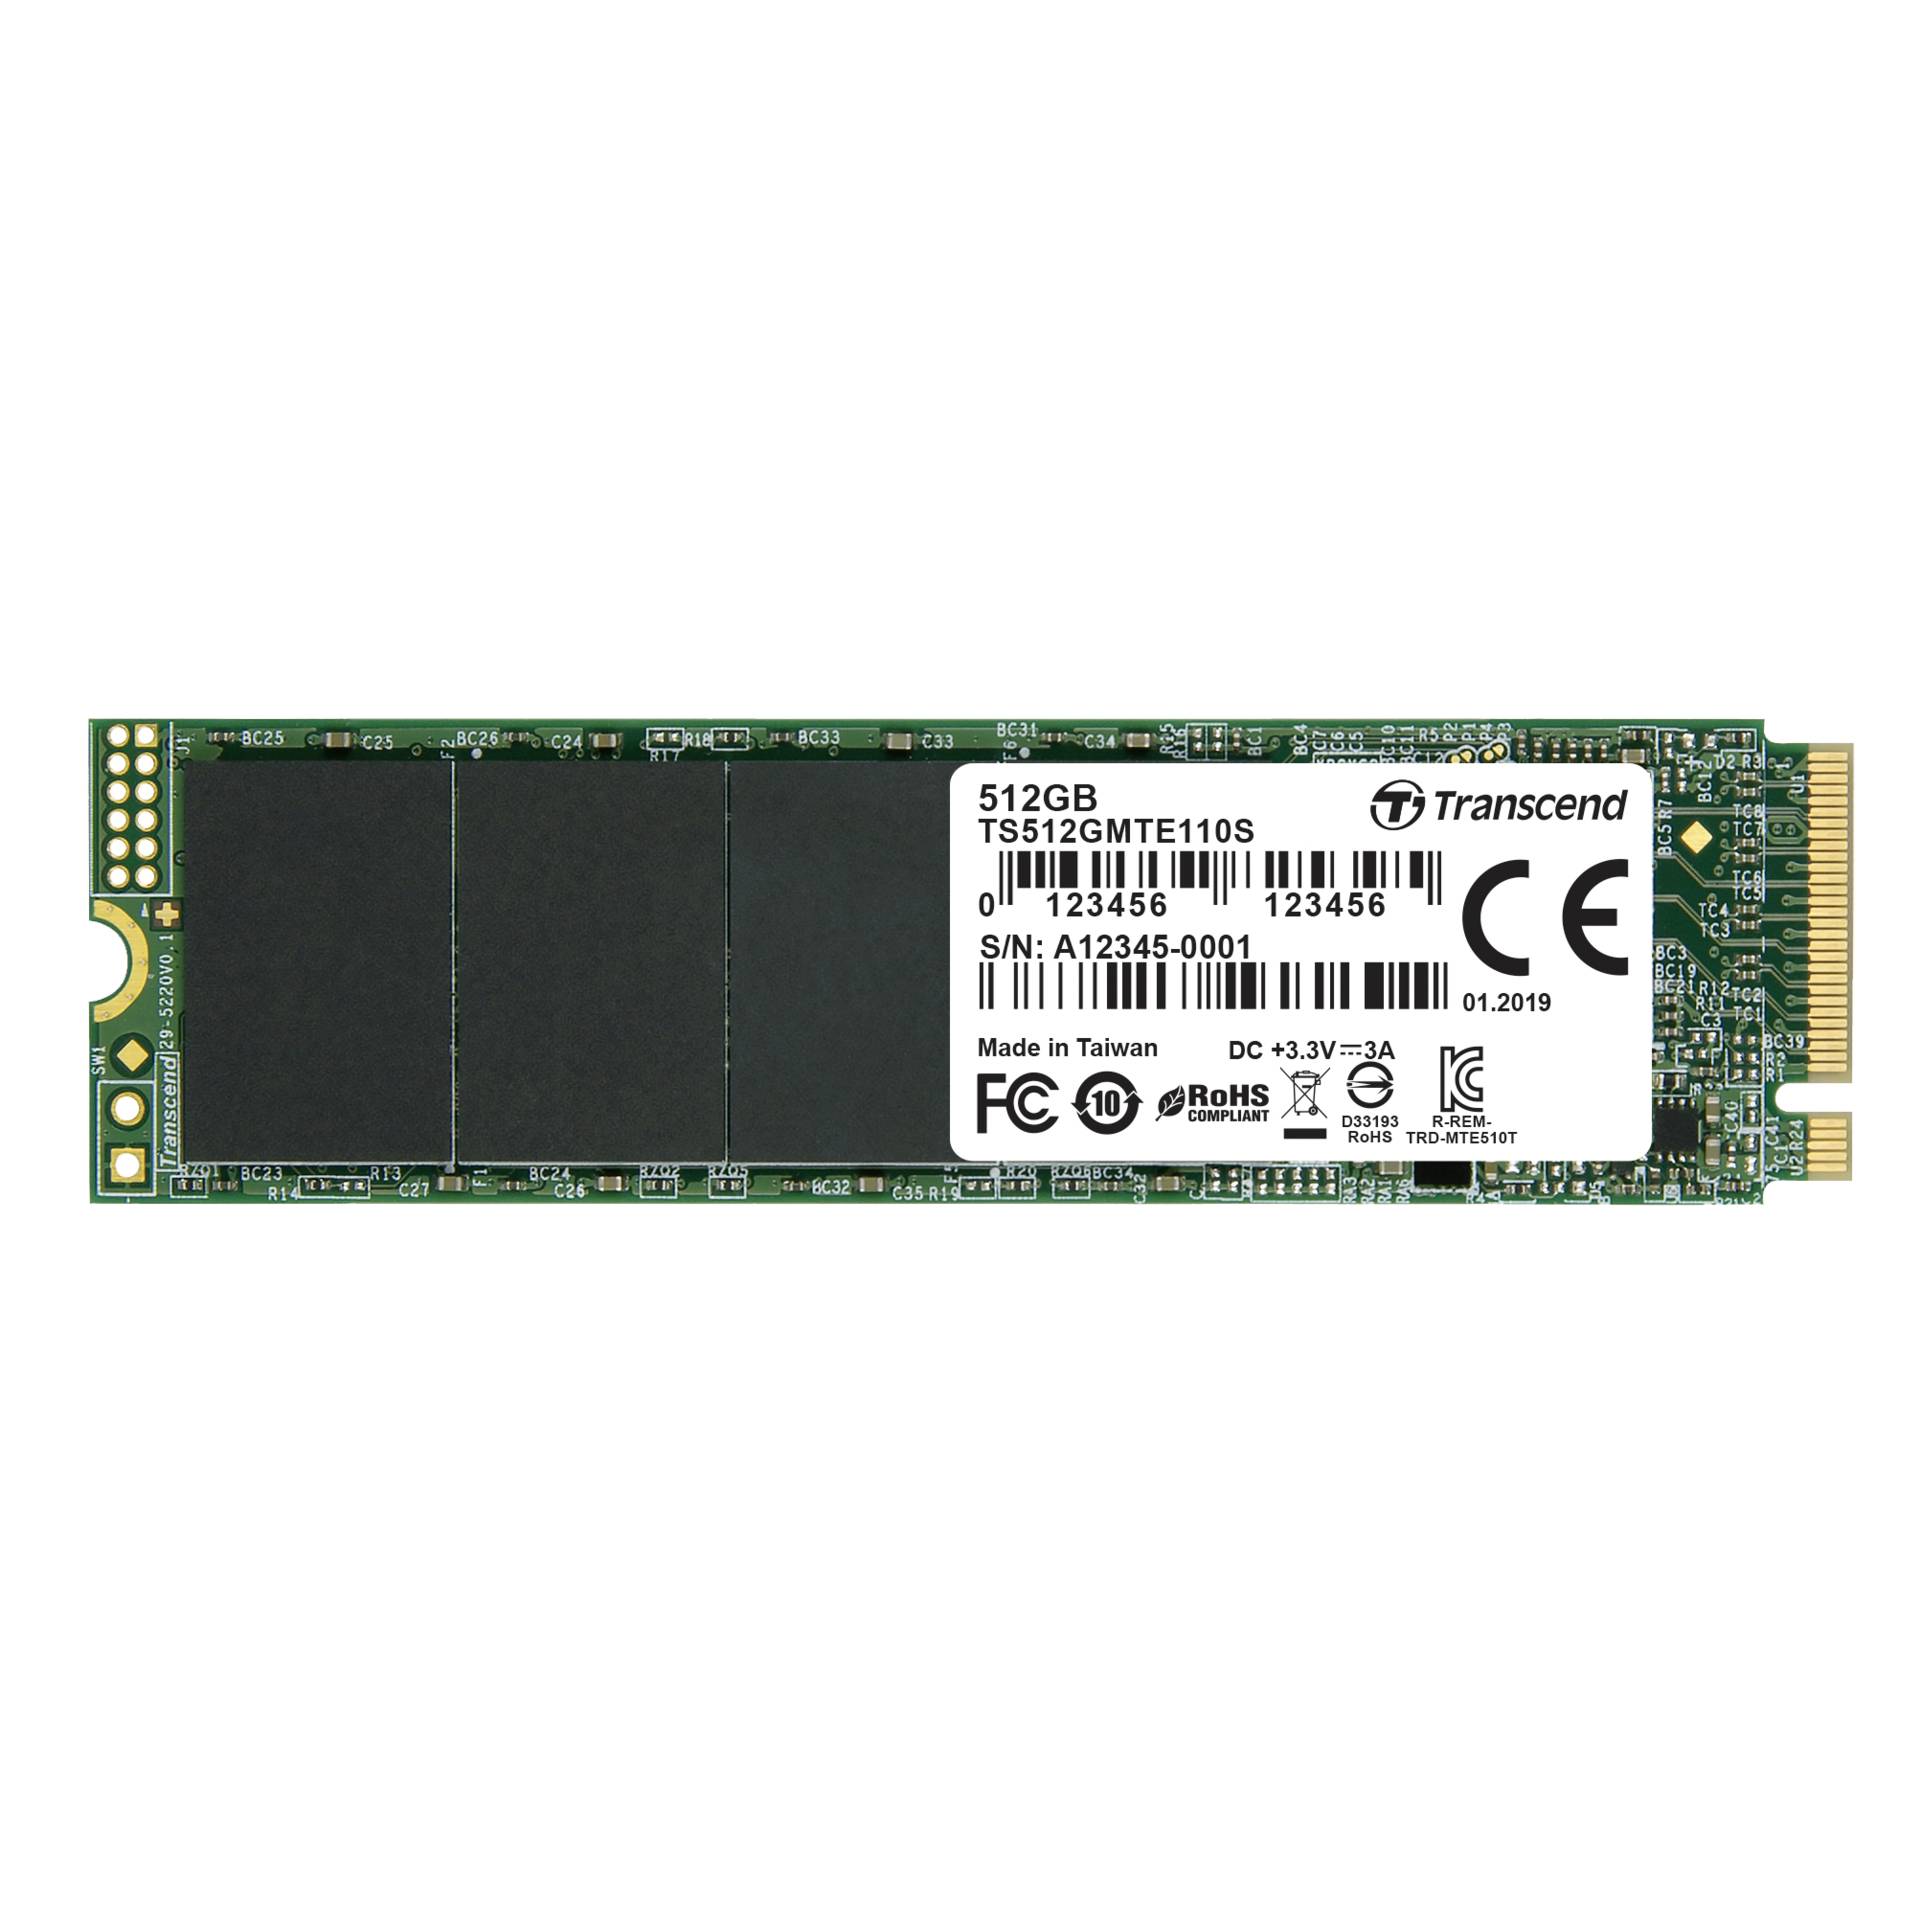 Transcend SSD MTE110S      512GB NVMe PCIe Gen3 x4